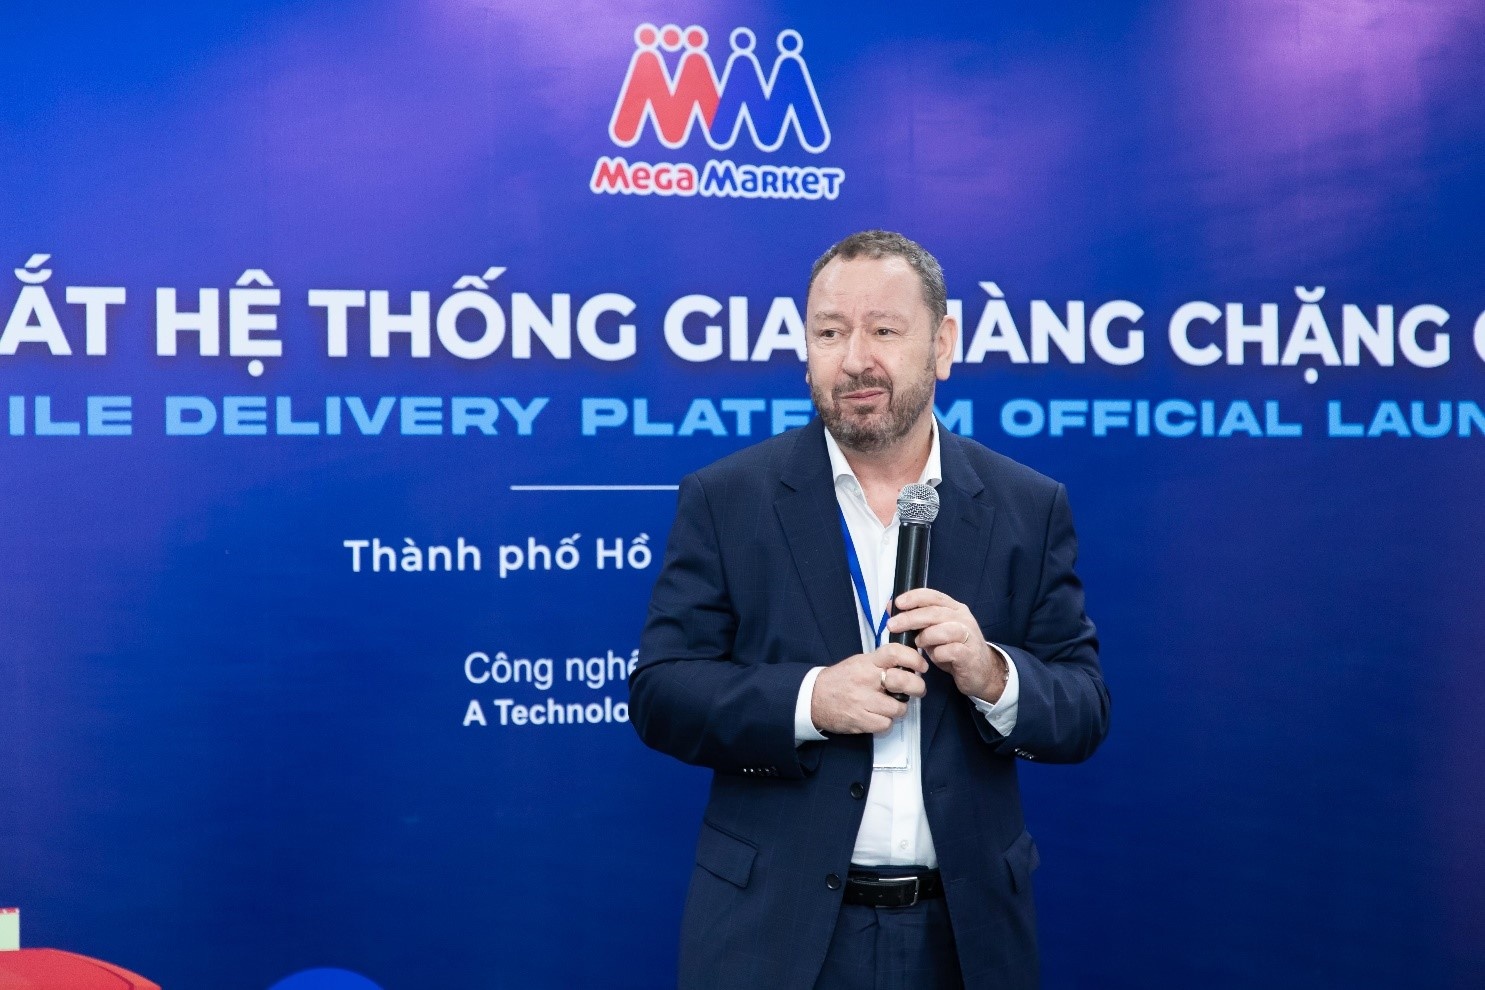 MM Mega Market Vietnam unveils cutting-edge last-mile delivery system